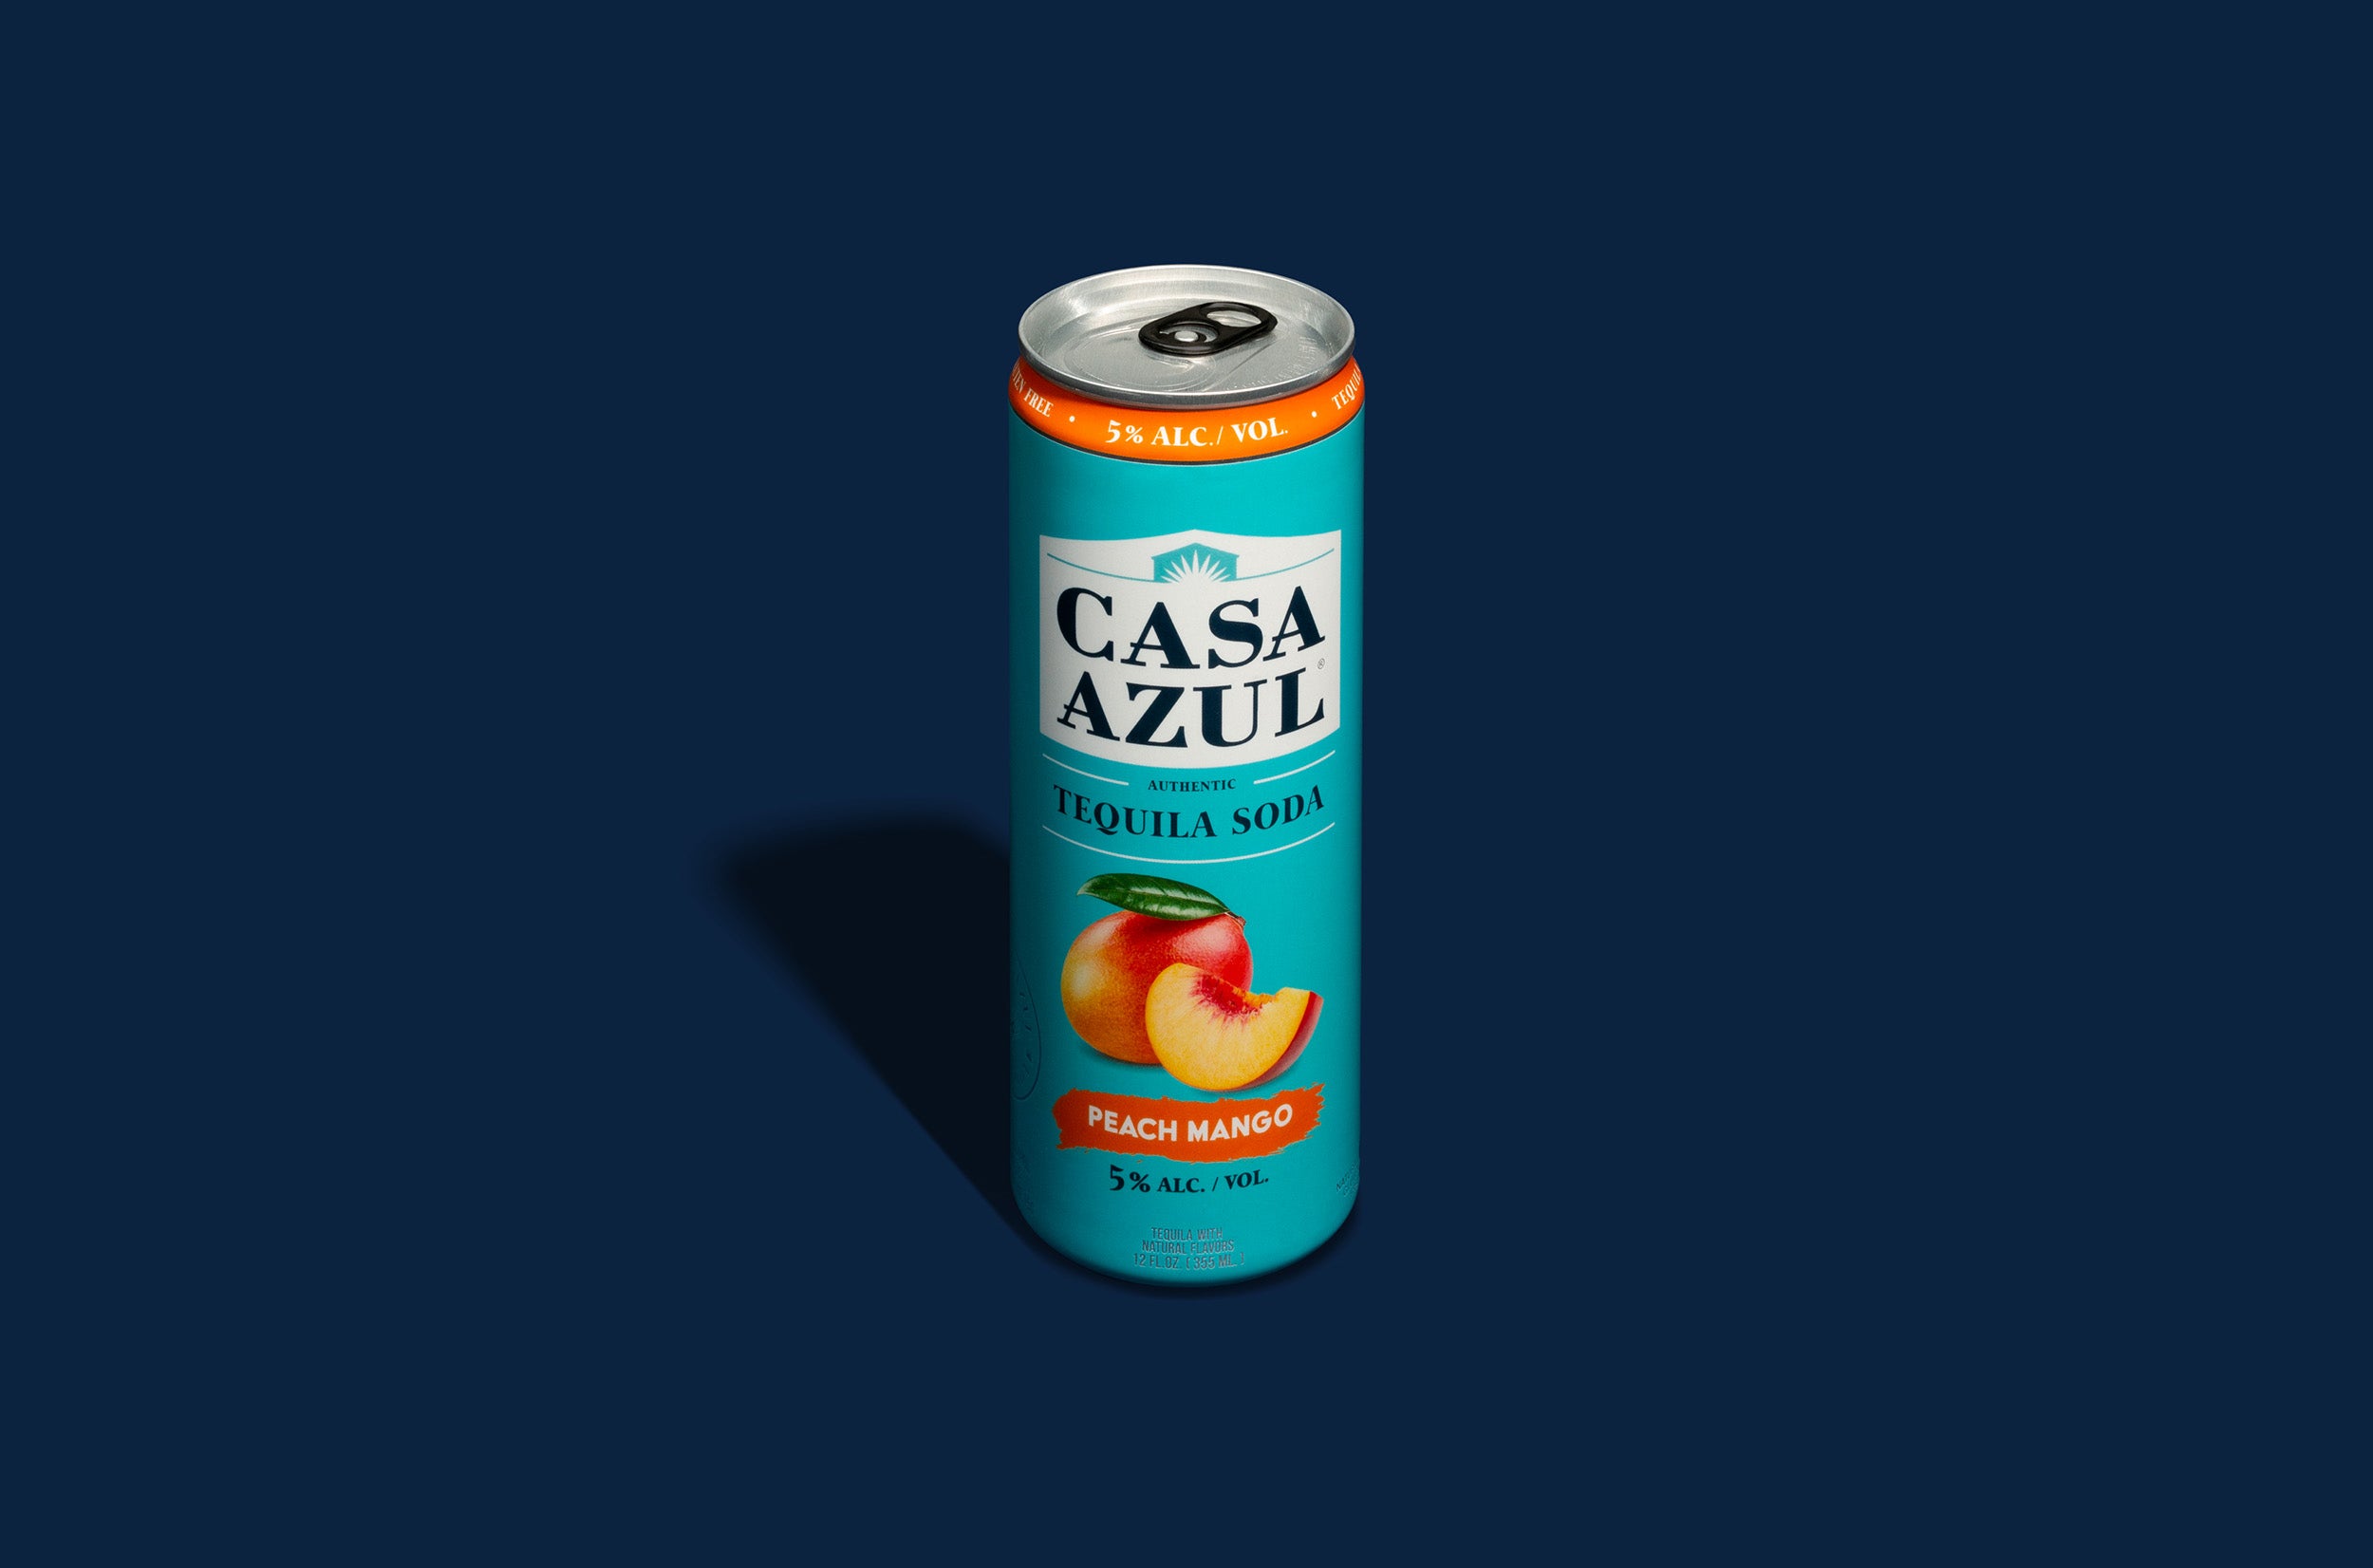 Casa Azul peach mango tequila soda can. 5% alcohol per volume